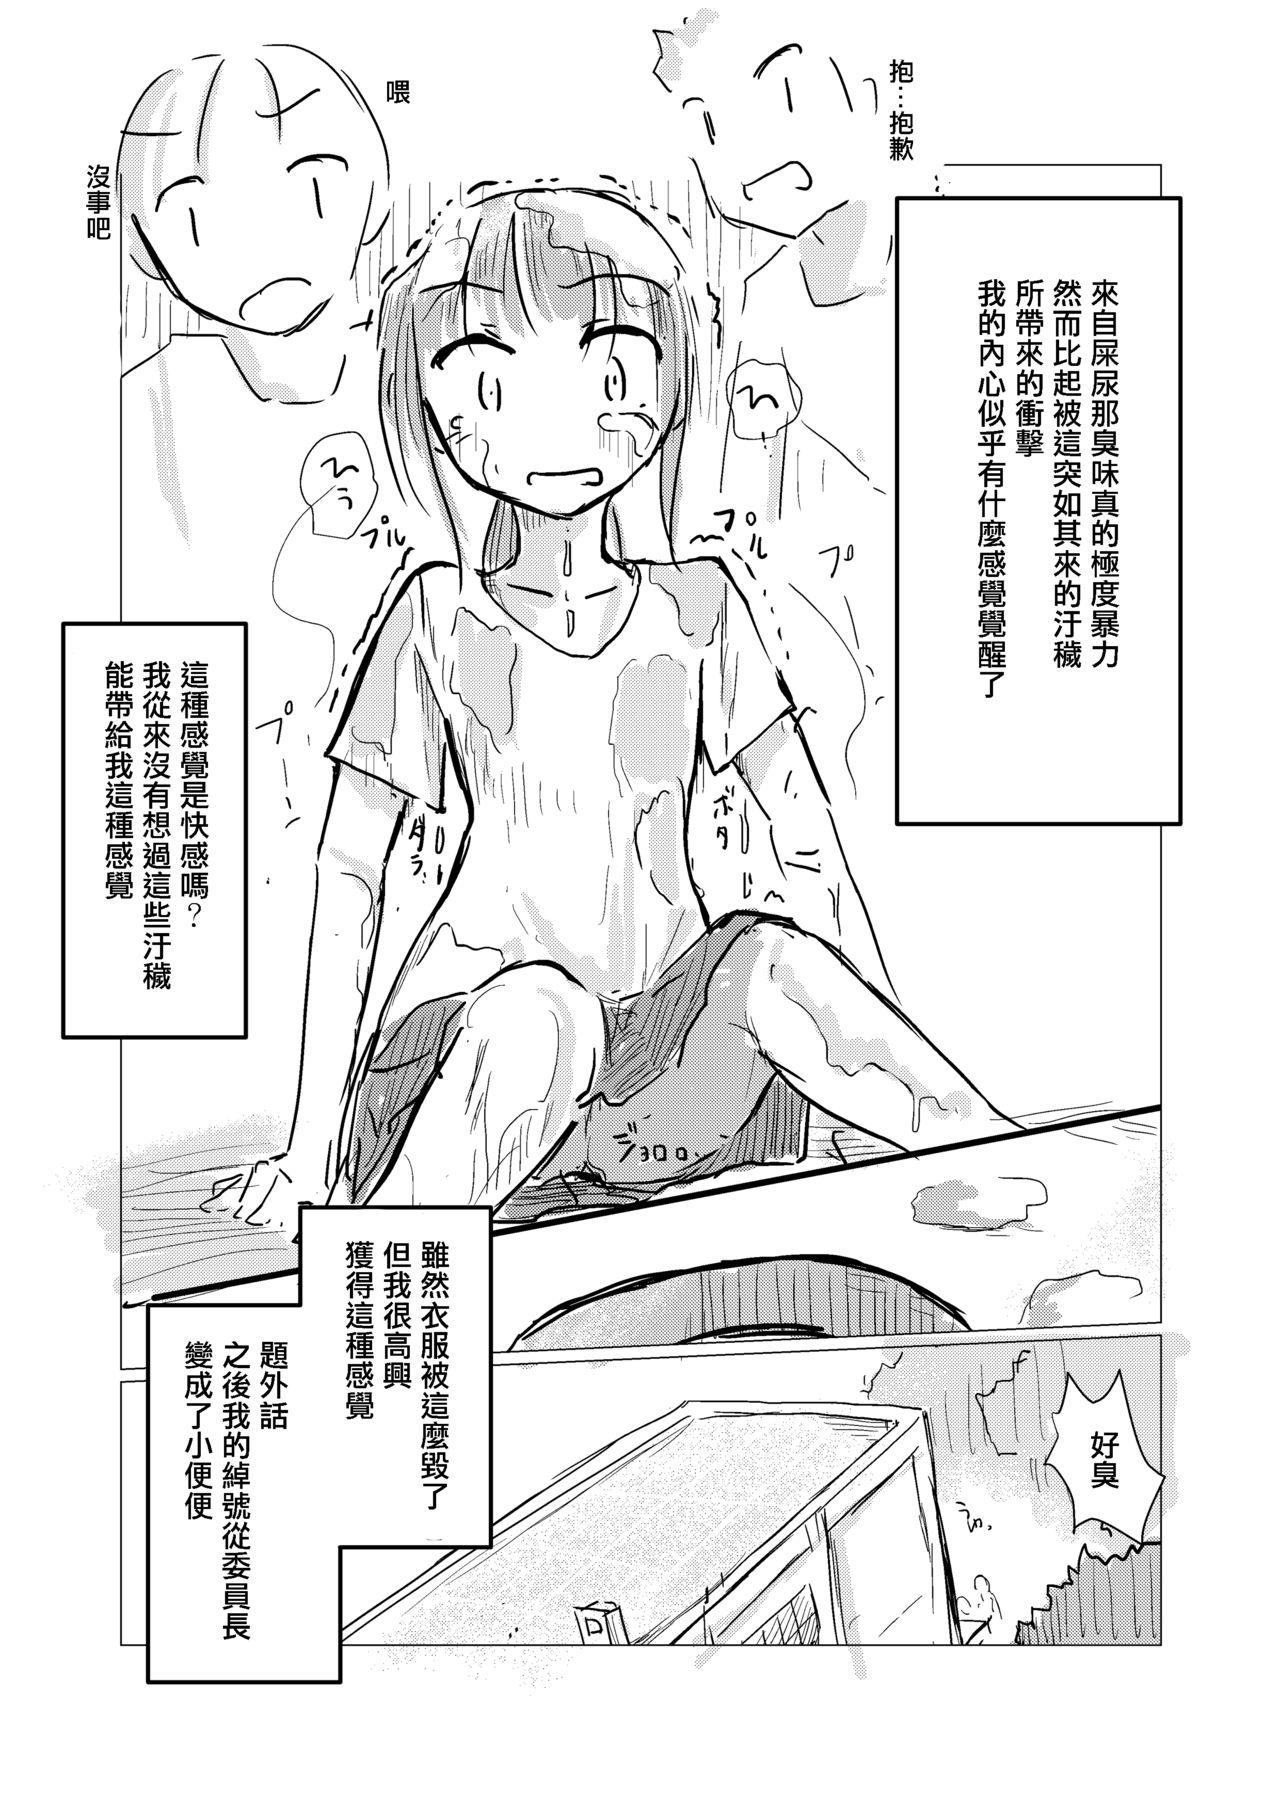 Filth Scat Manga 3